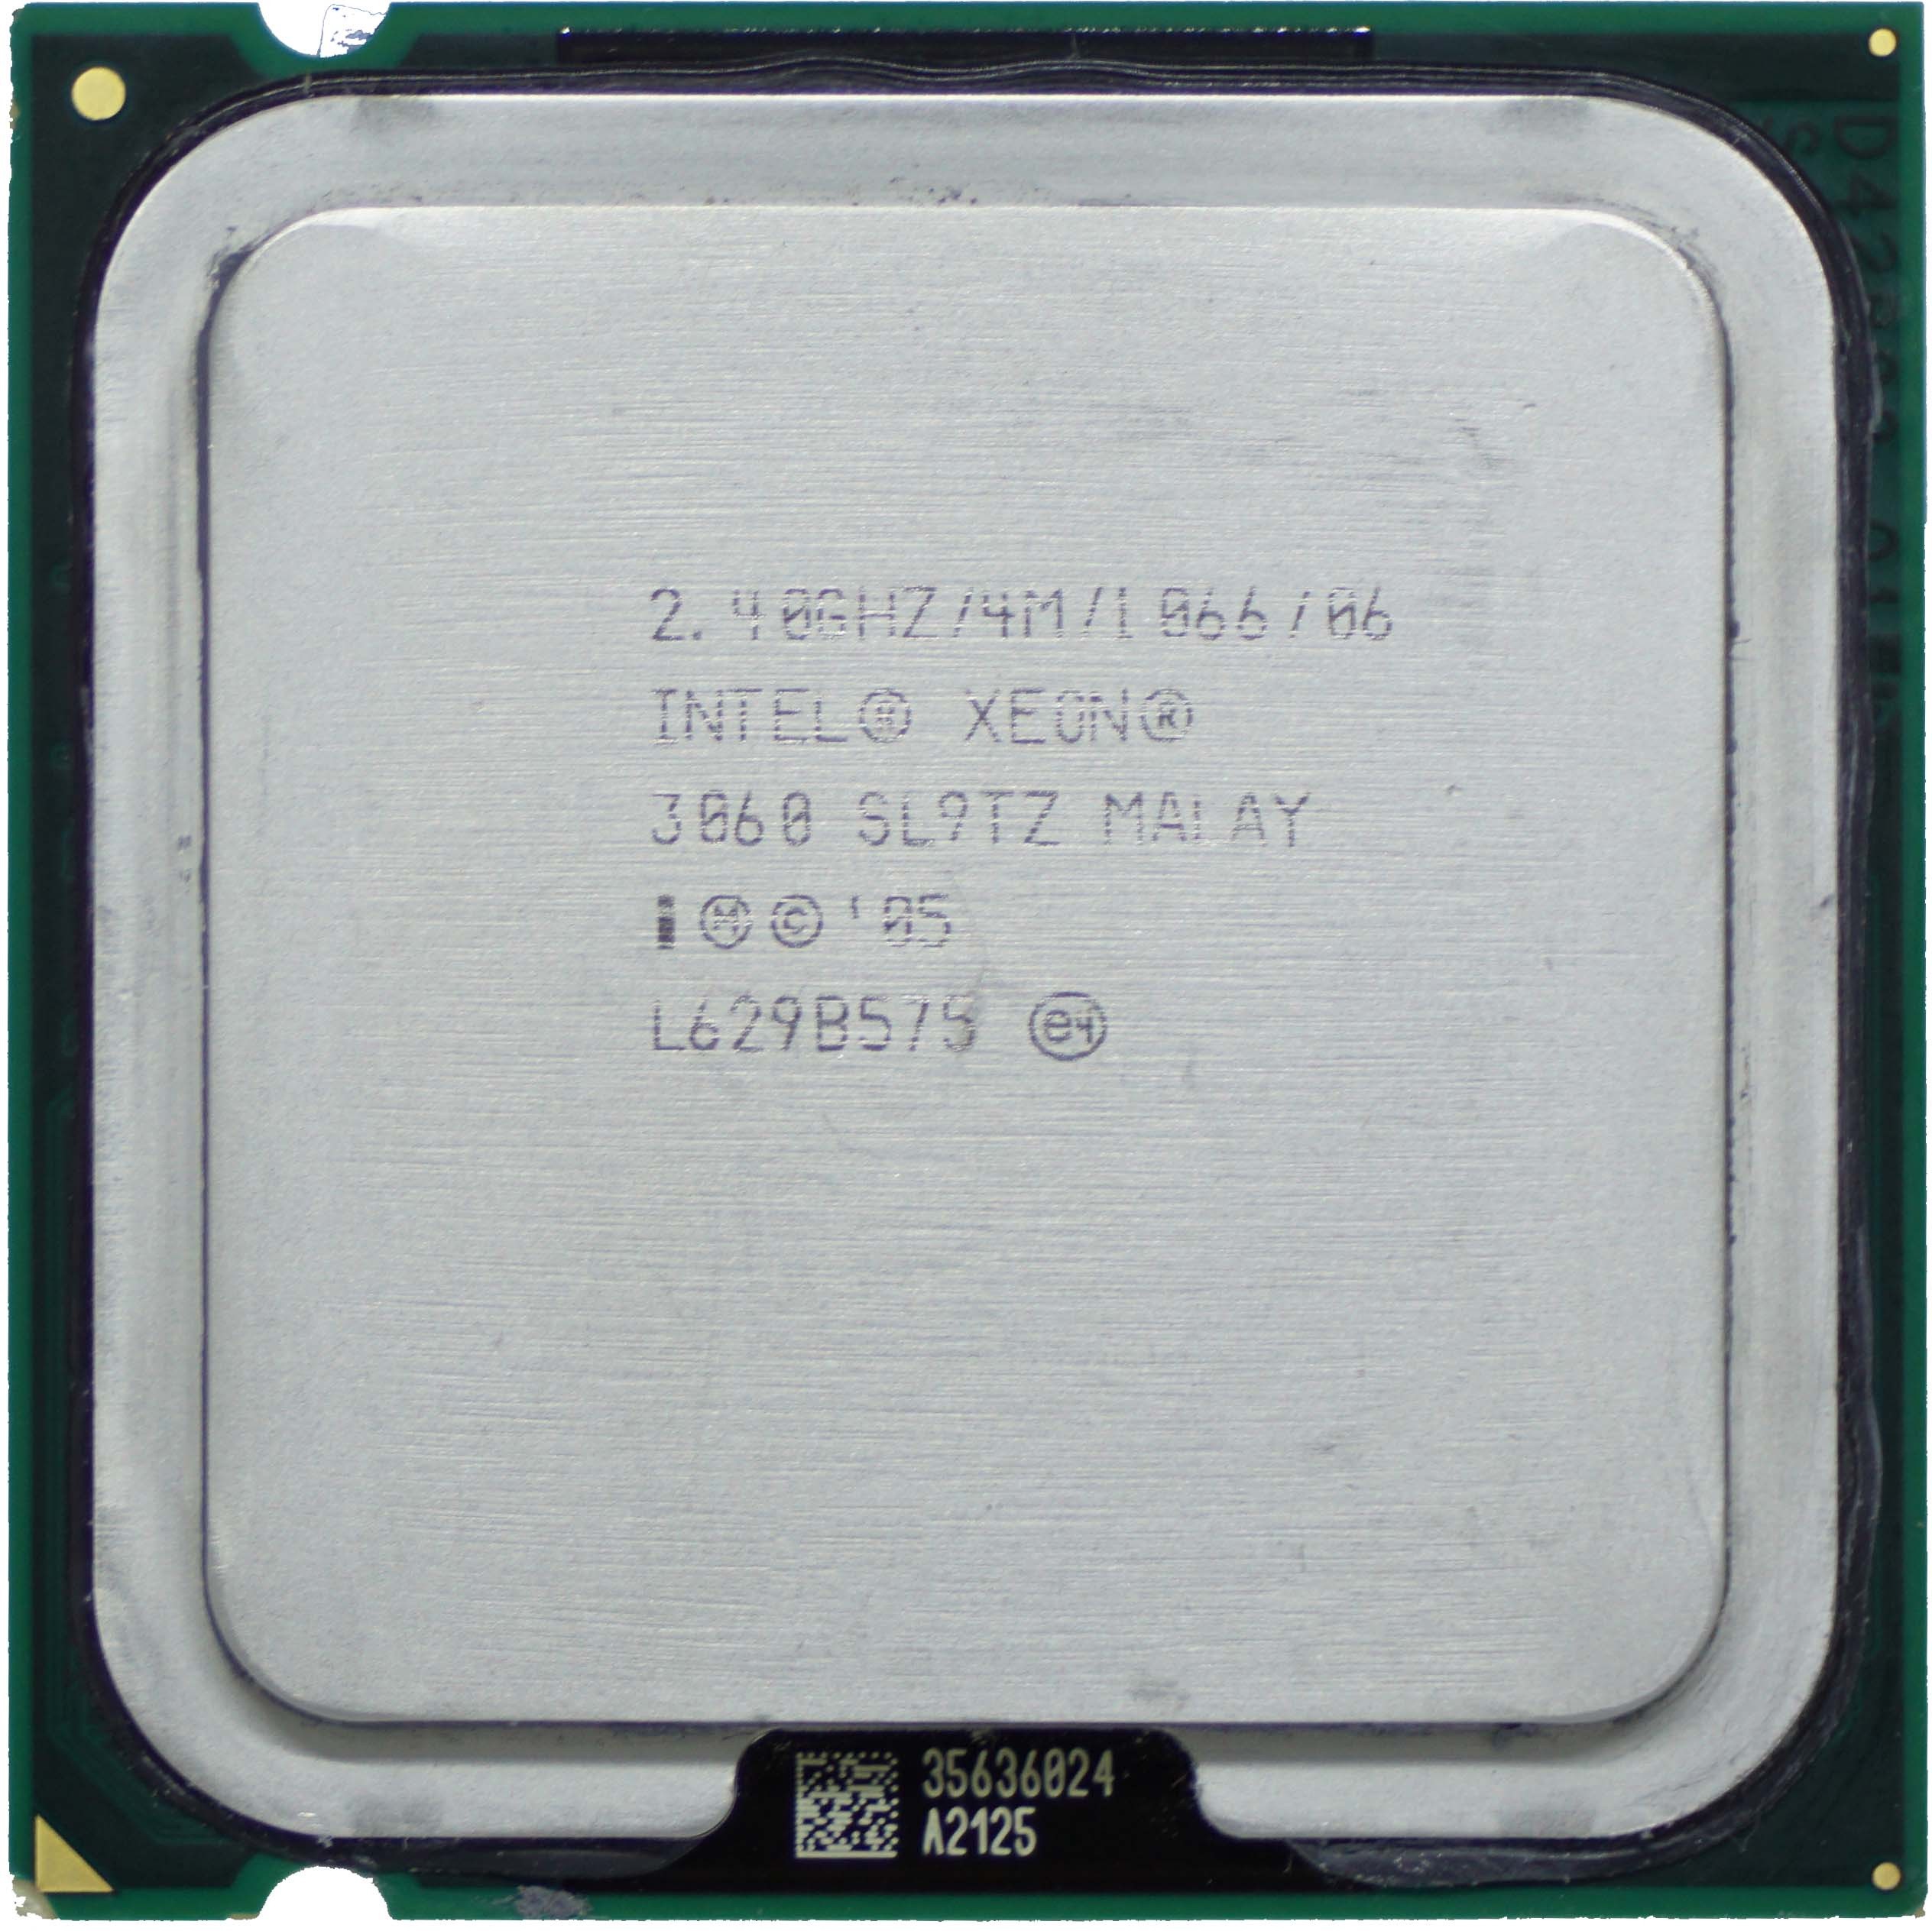 Intel Xeon 3060 (SL9TZ) 2.40Ghz Dual (2) Core LGA775 65W CPU